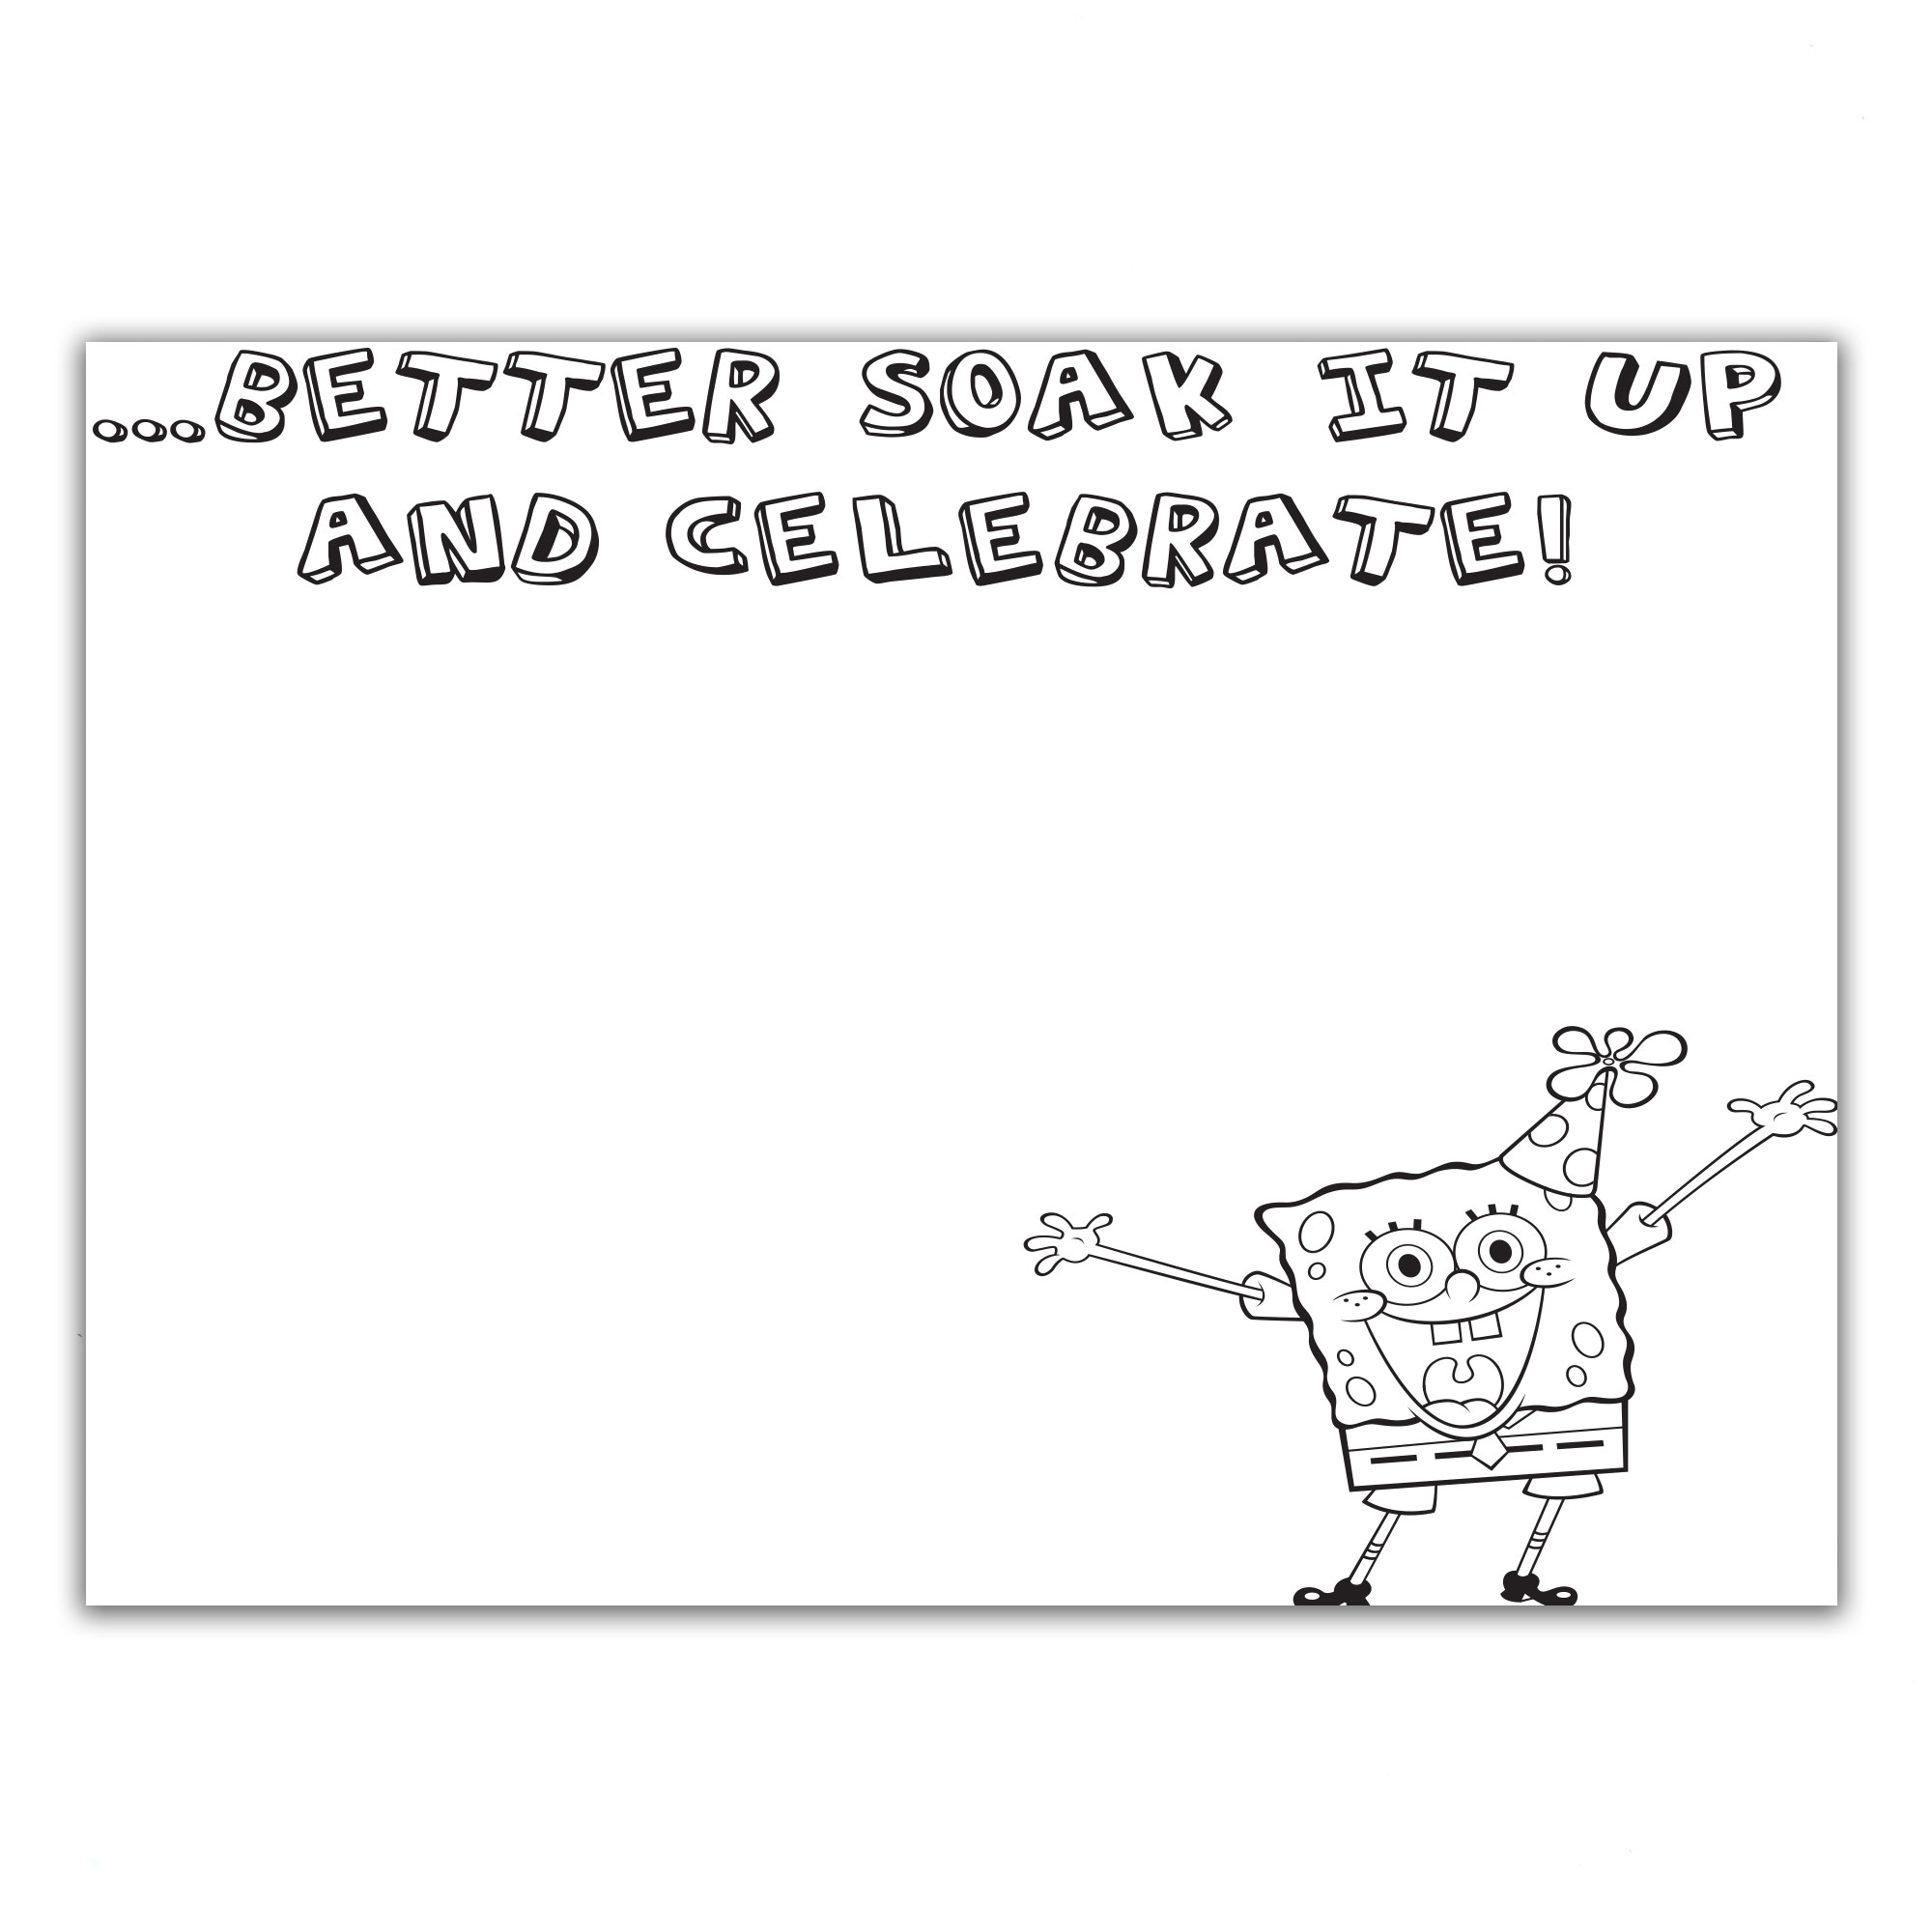 SpongeBob SquarePants Birthday Card - Oh Pants!